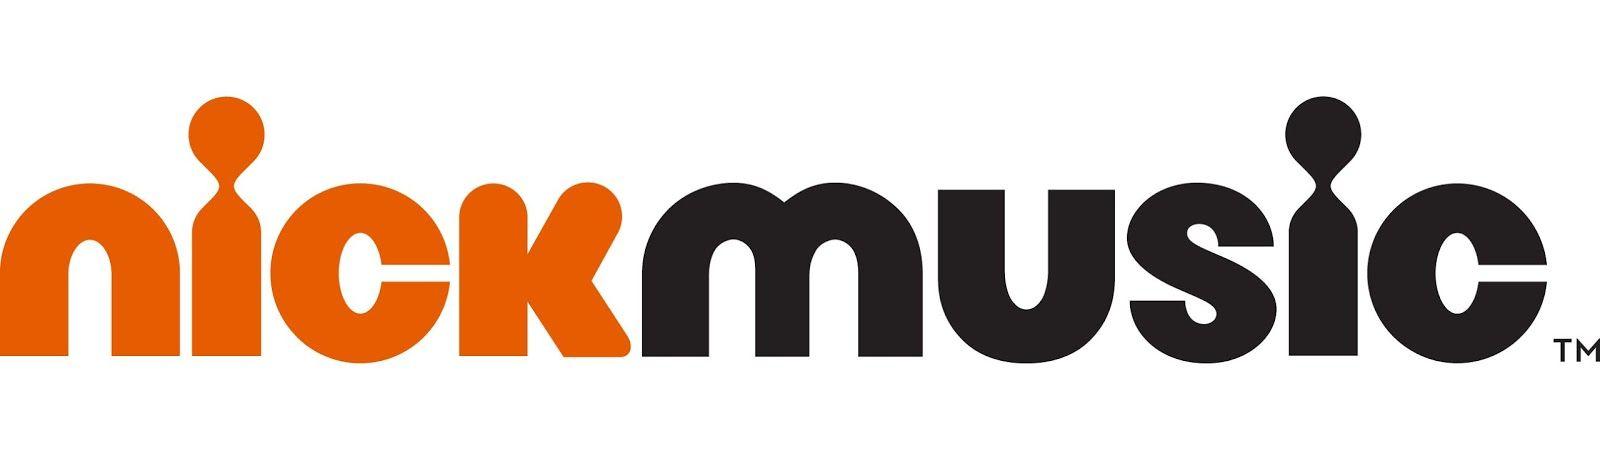 New Nickelodeon Logo - NickALive!: Nickelodeon USA Unveils NickMusic Channel Description ...